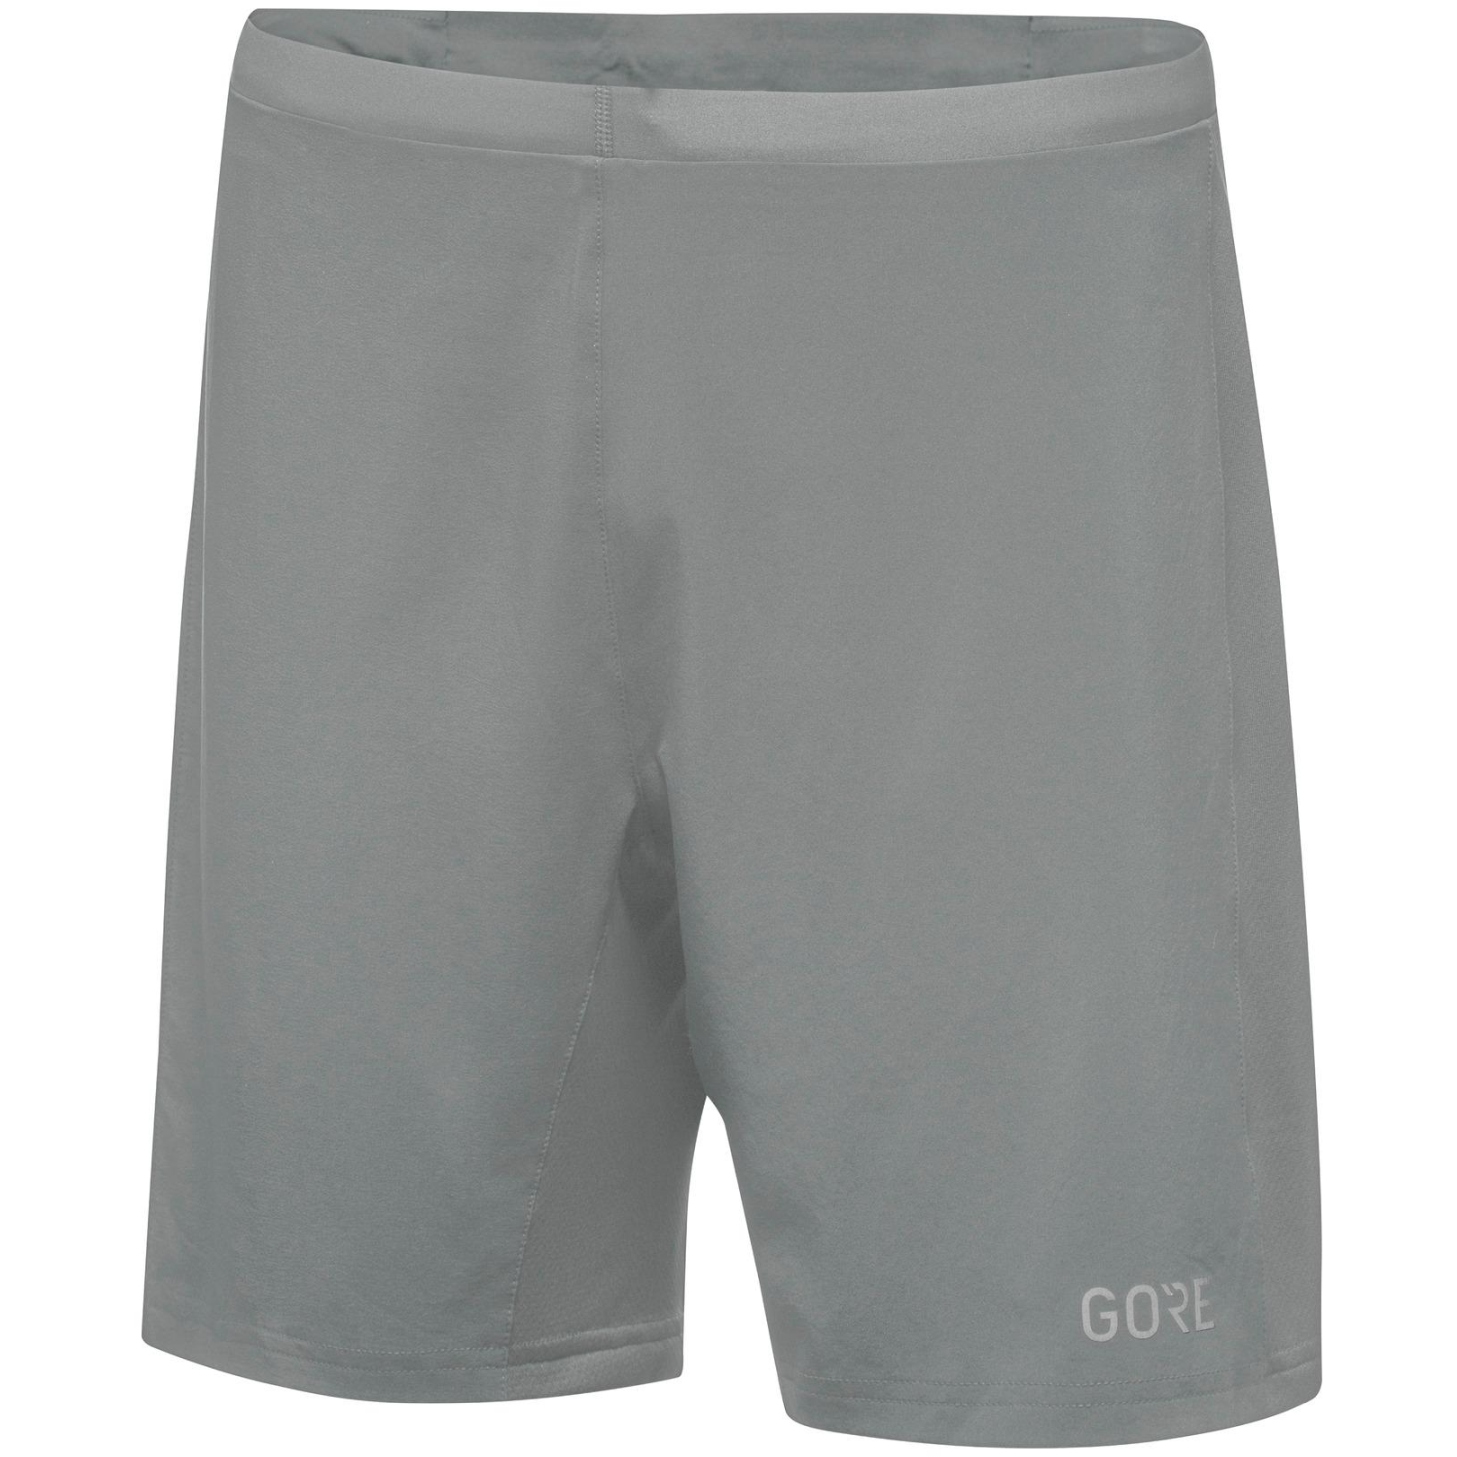 Productfoto van GOREWEAR R5 2in1 Shorts Heren - lab gray BF00